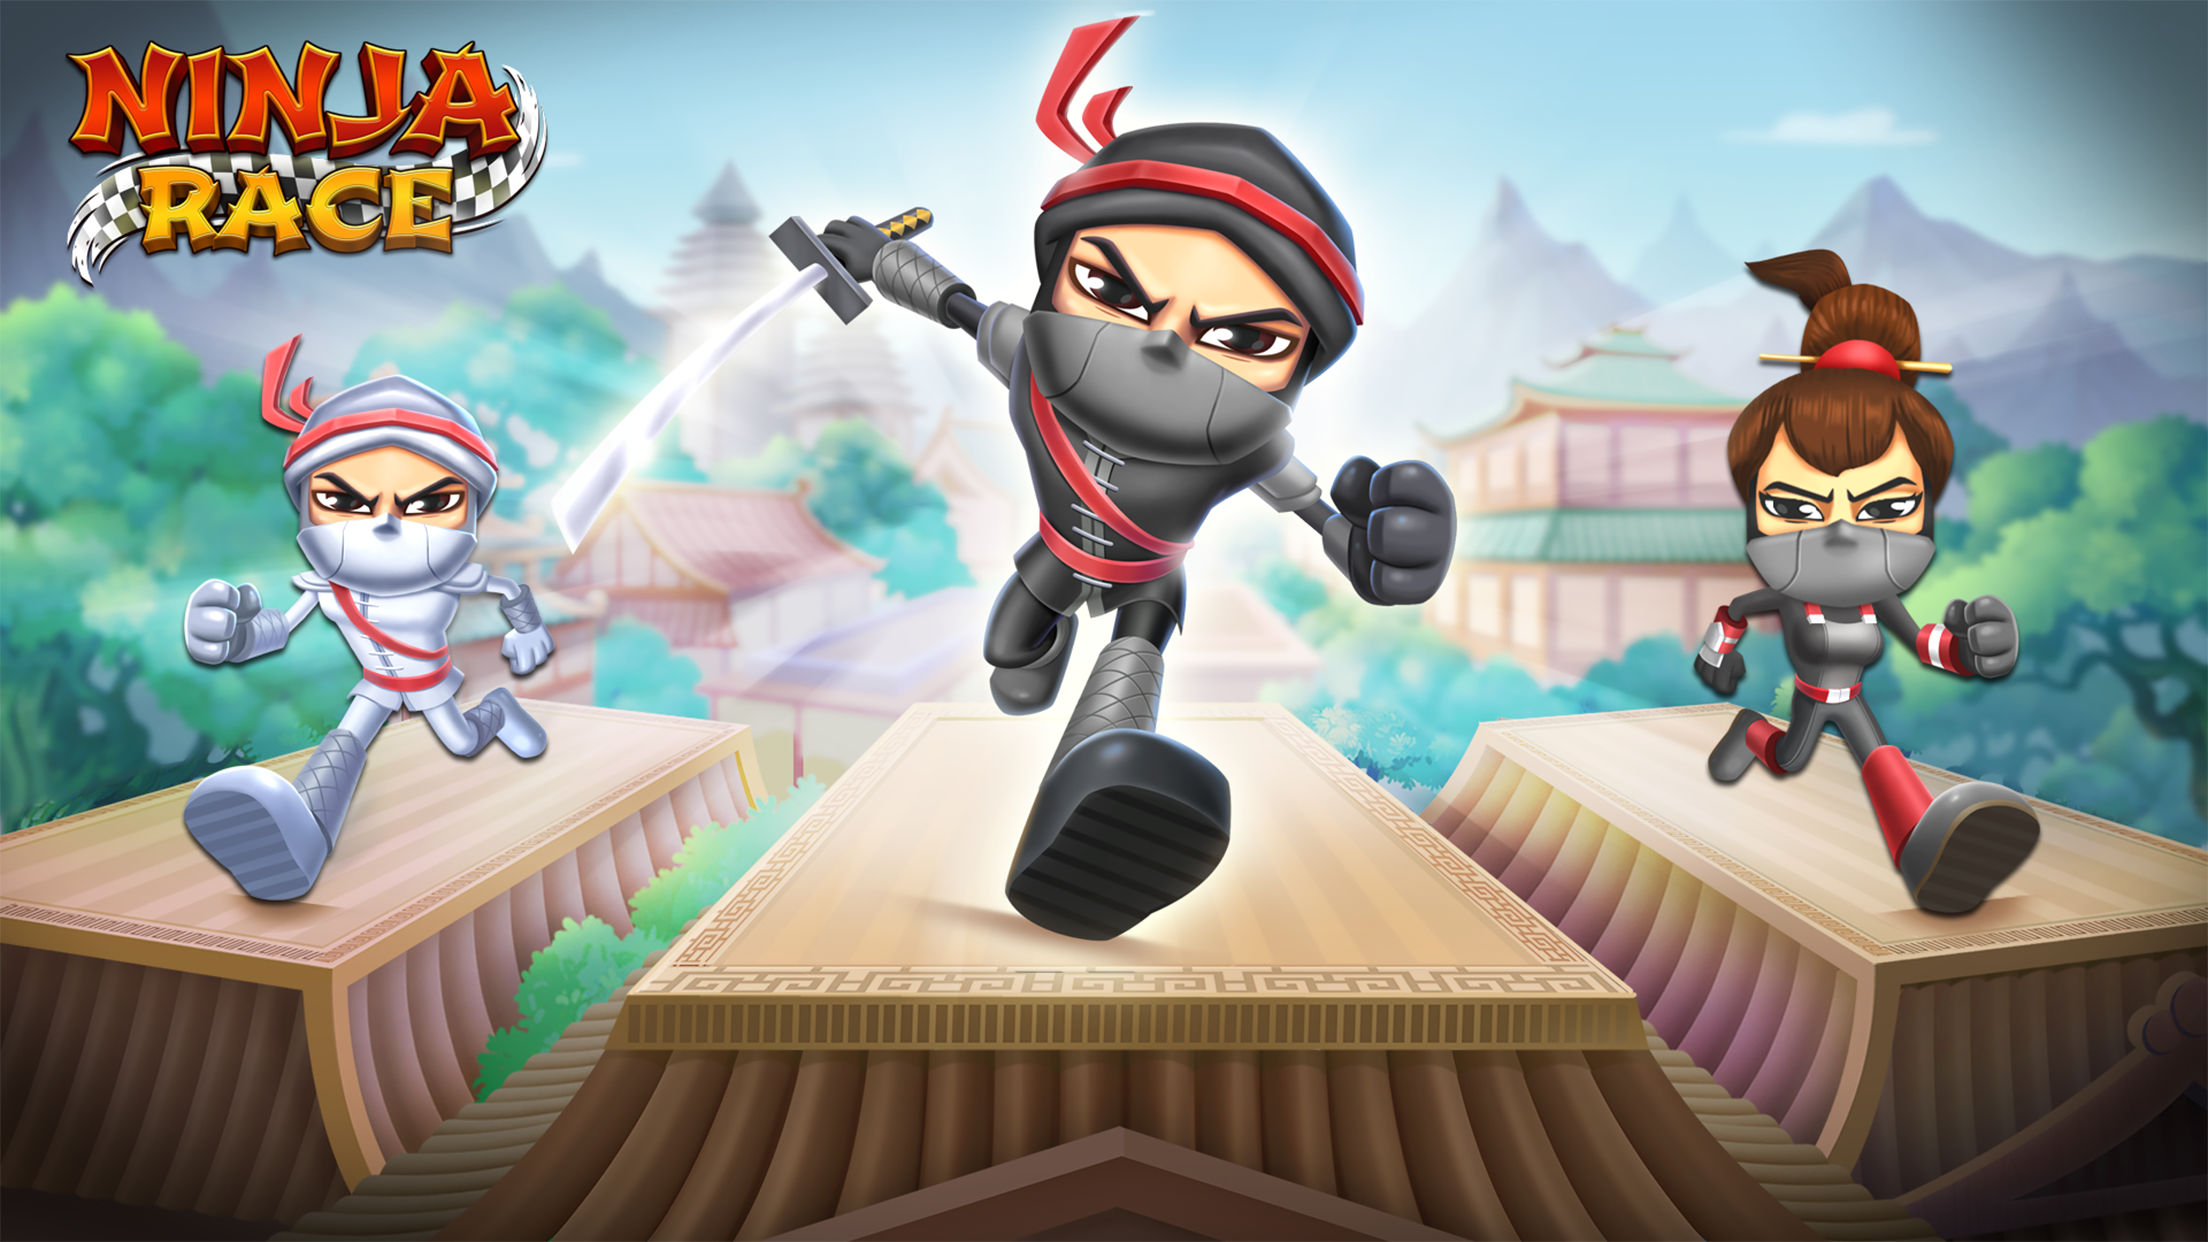 Screenshot 1 of Ninja Race - အပျော်အပြေးကစားသူအများအပြား 